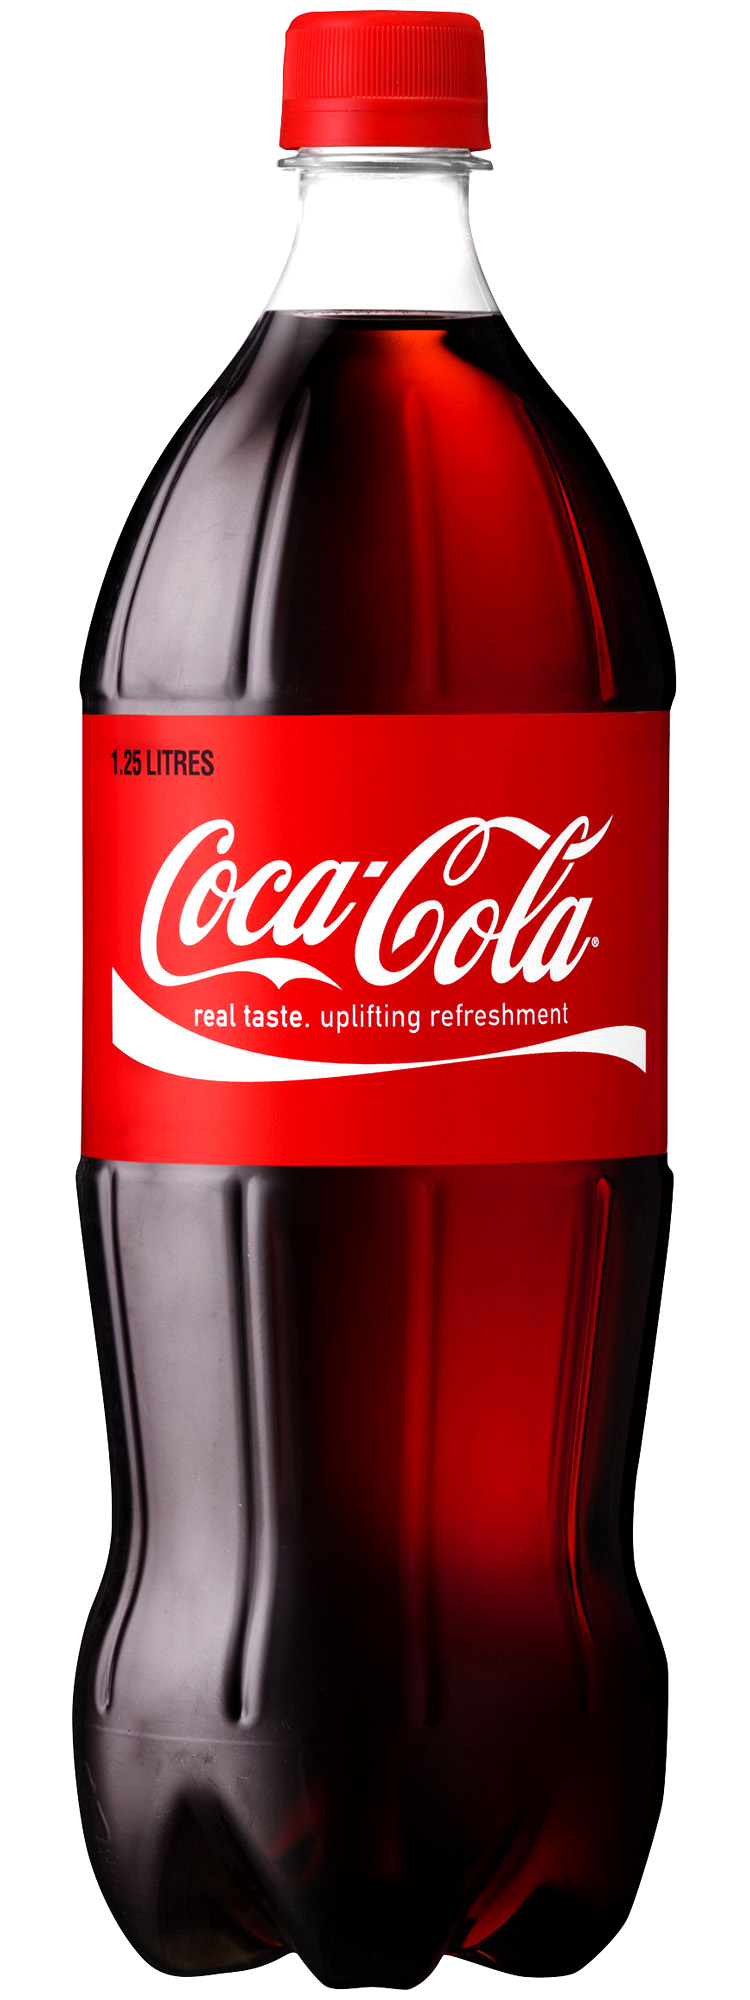 Coca Cola Bottle Png Image - Cocacola, Transparent background PNG HD thumbnail